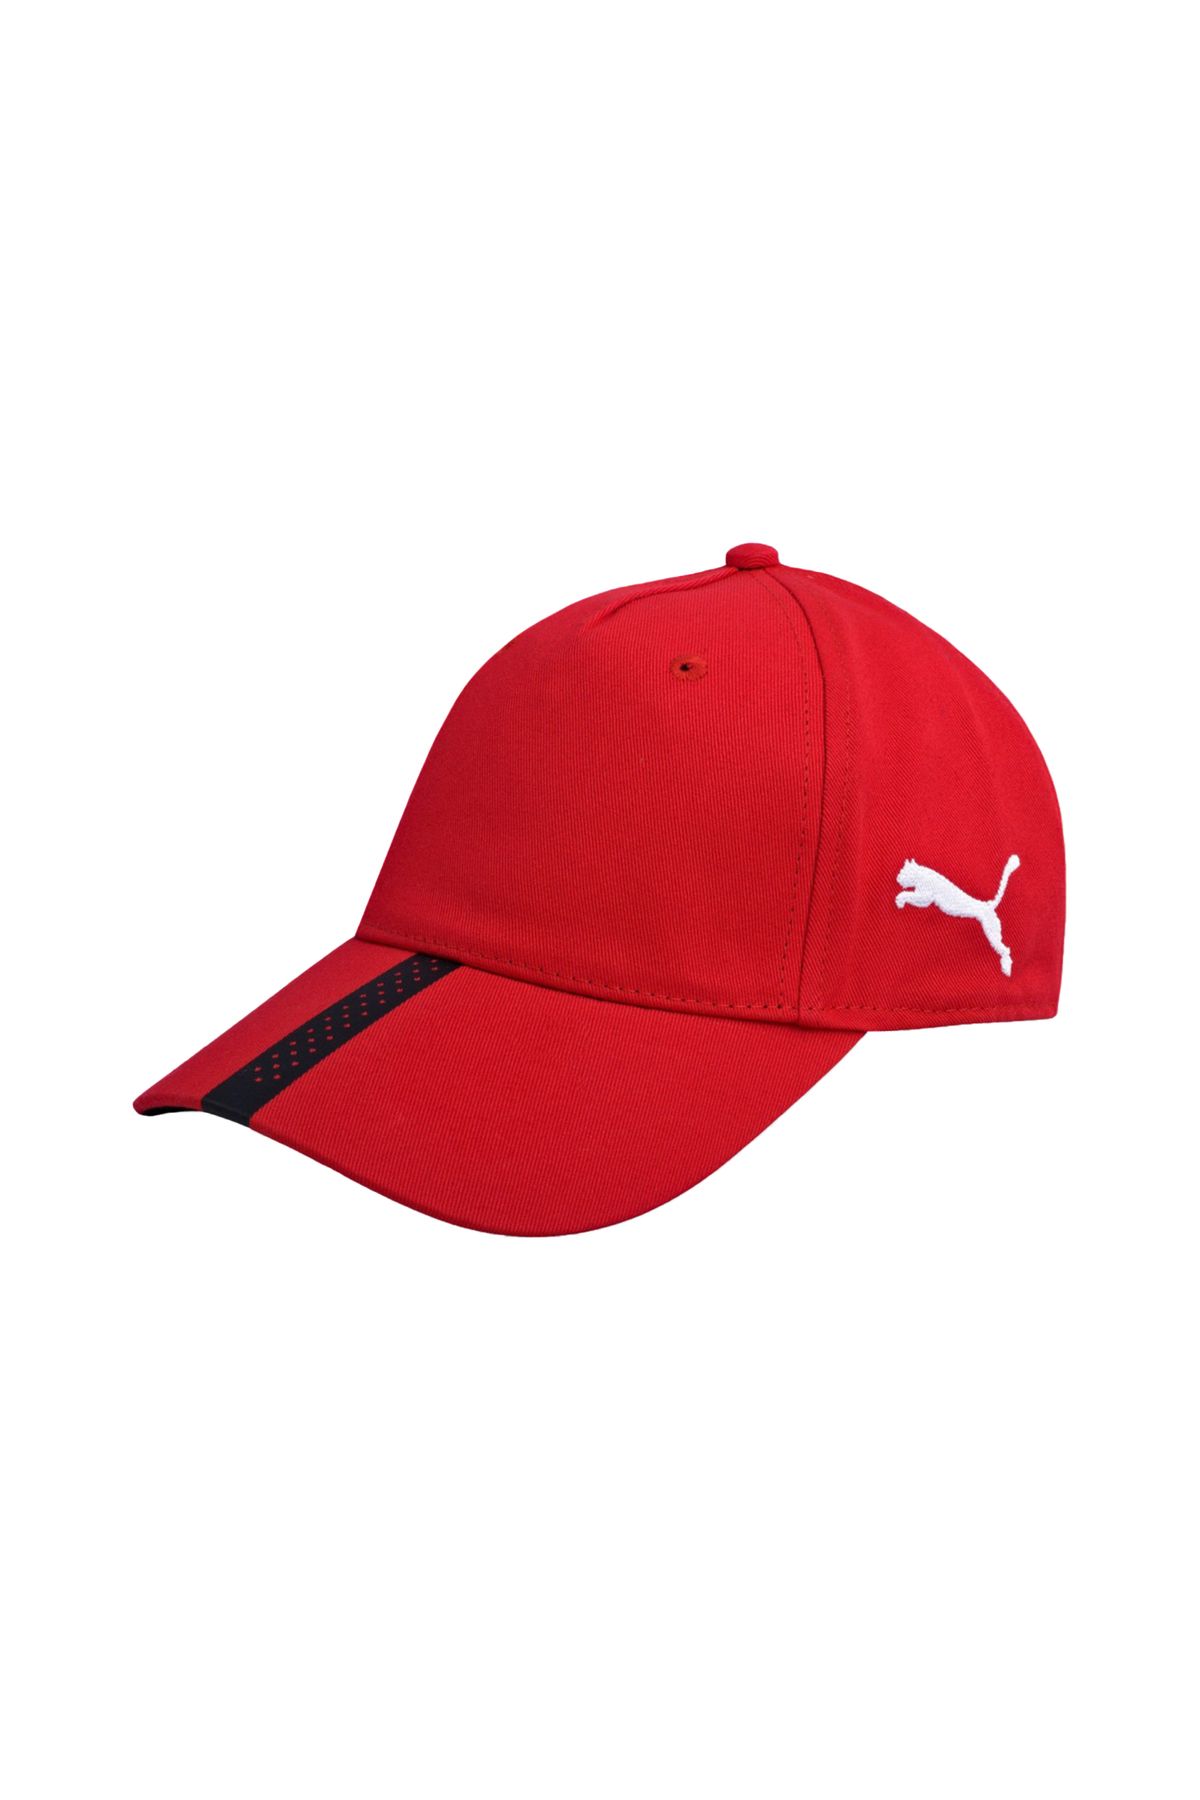 Puma Unisex Ayarlanabilir Spor Şapka